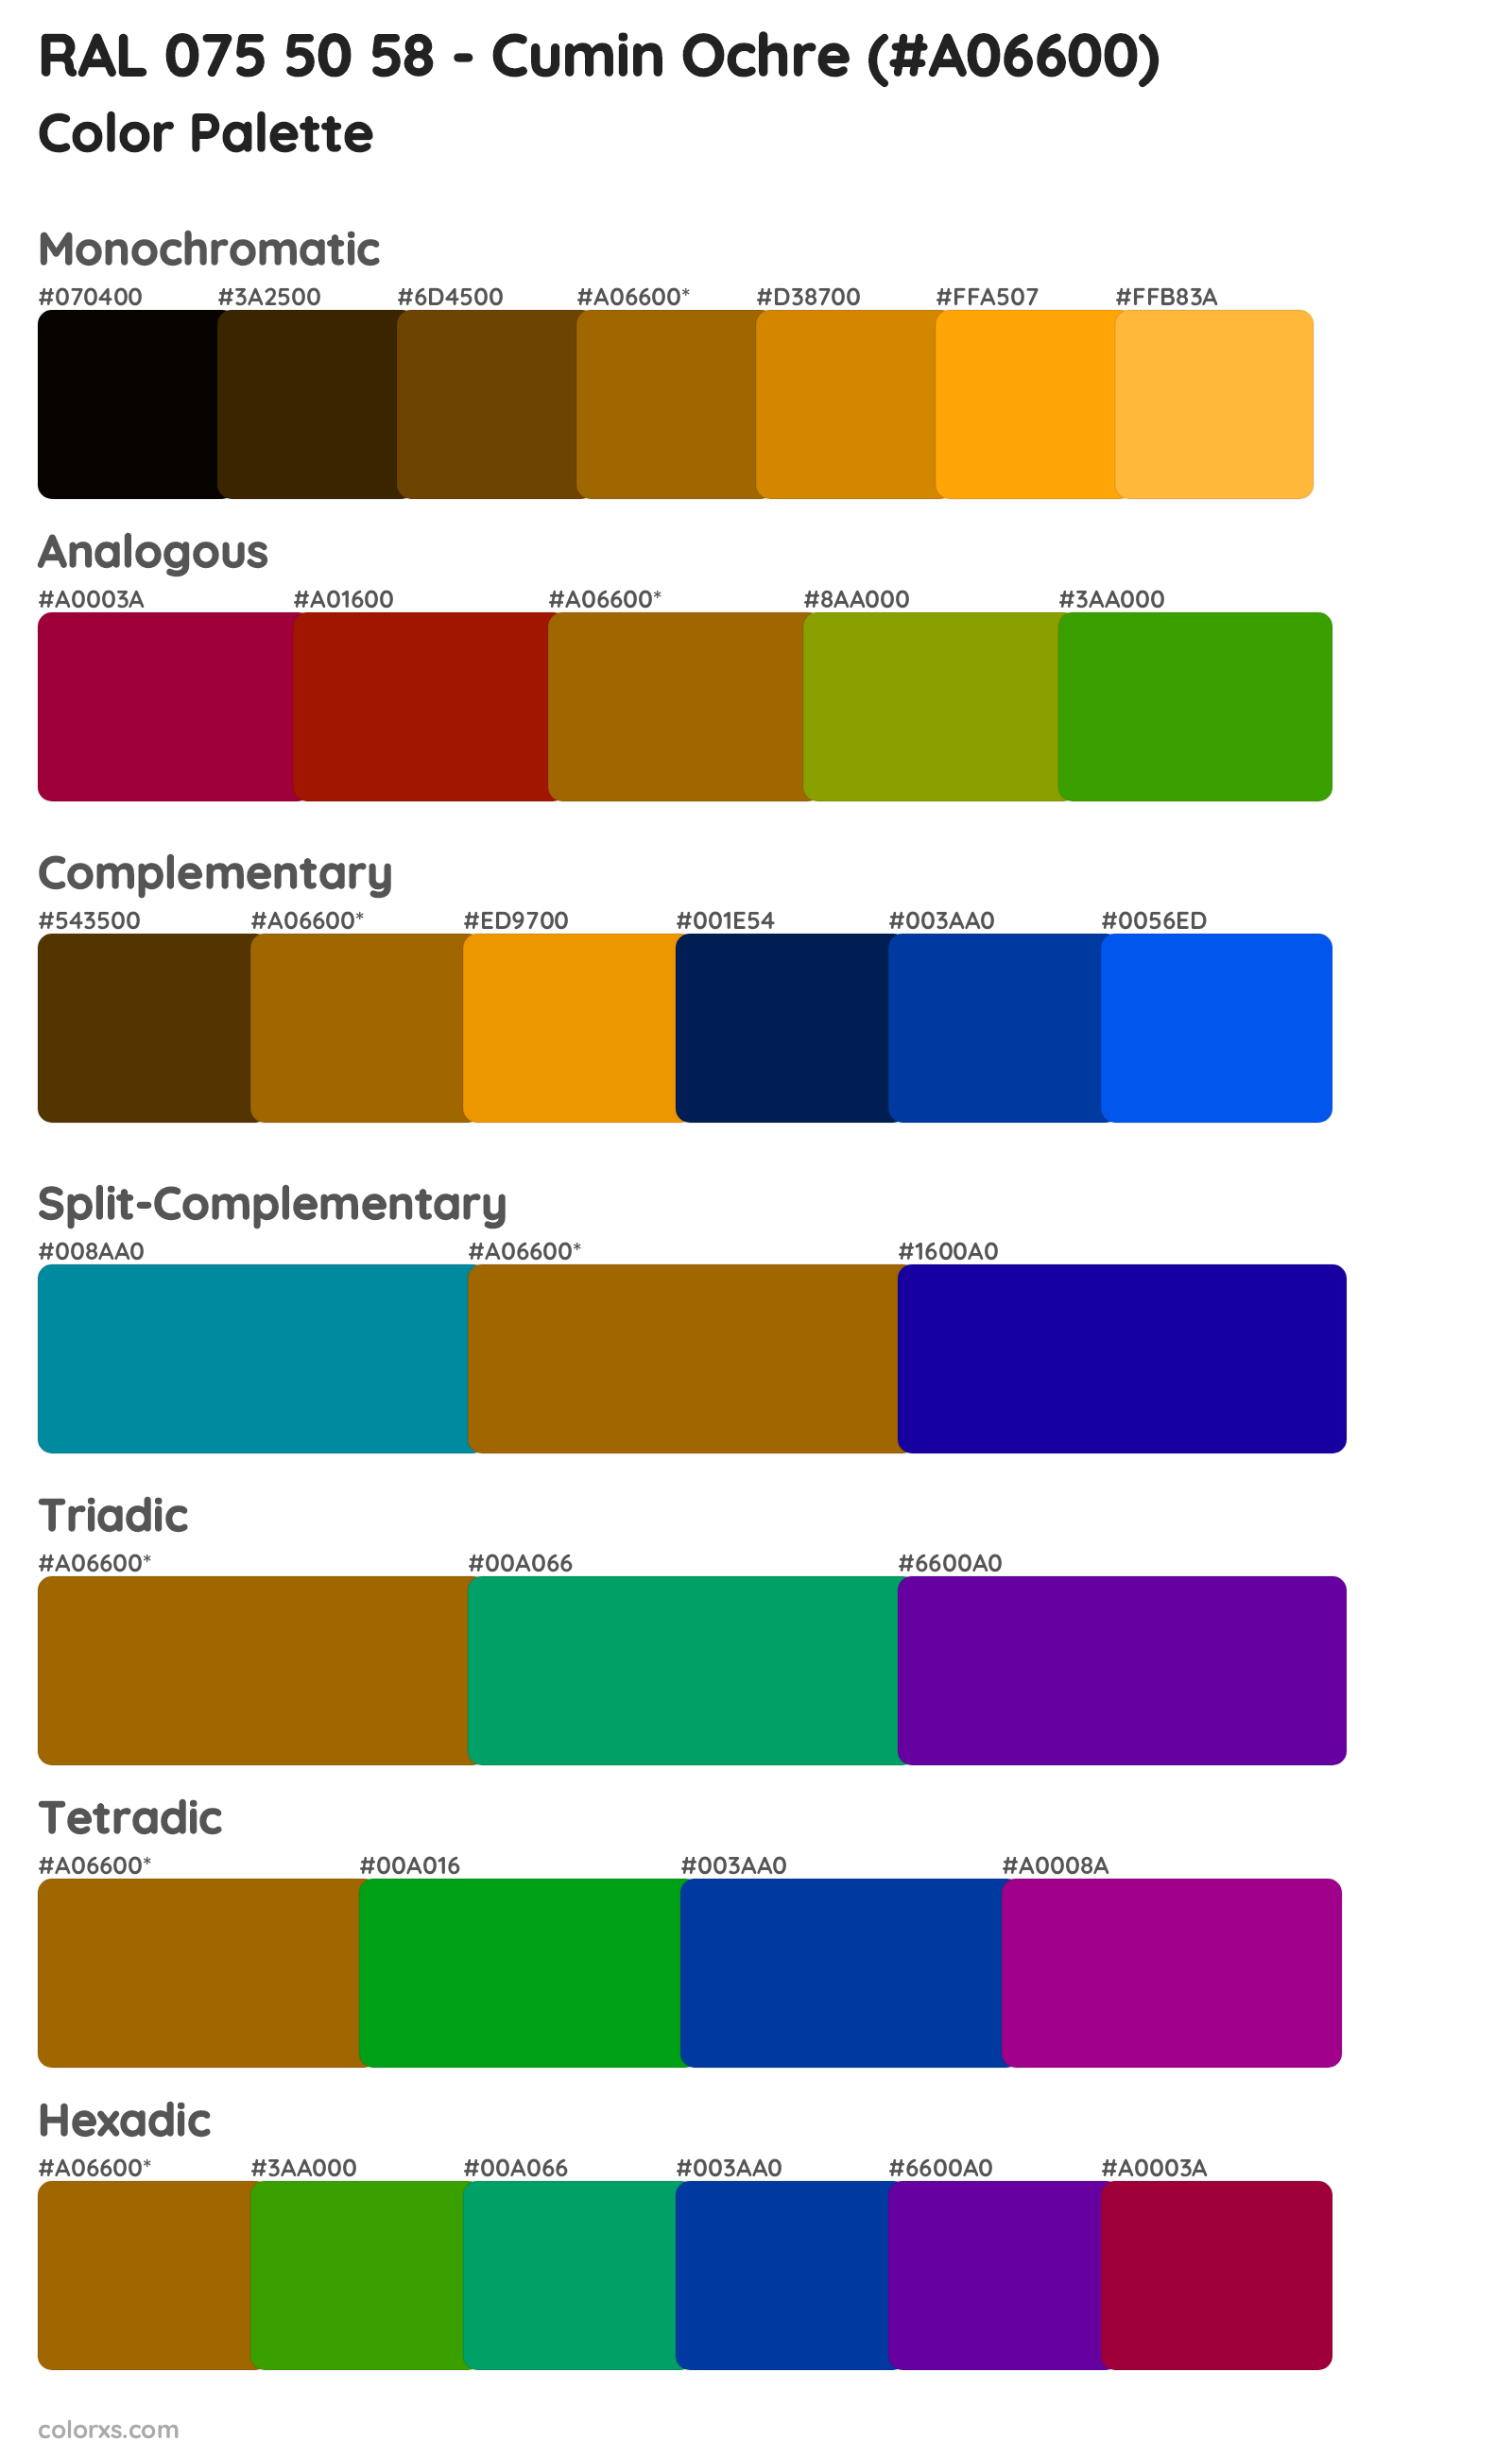 RAL 075 50 58 - Cumin Ochre Color Scheme Palettes